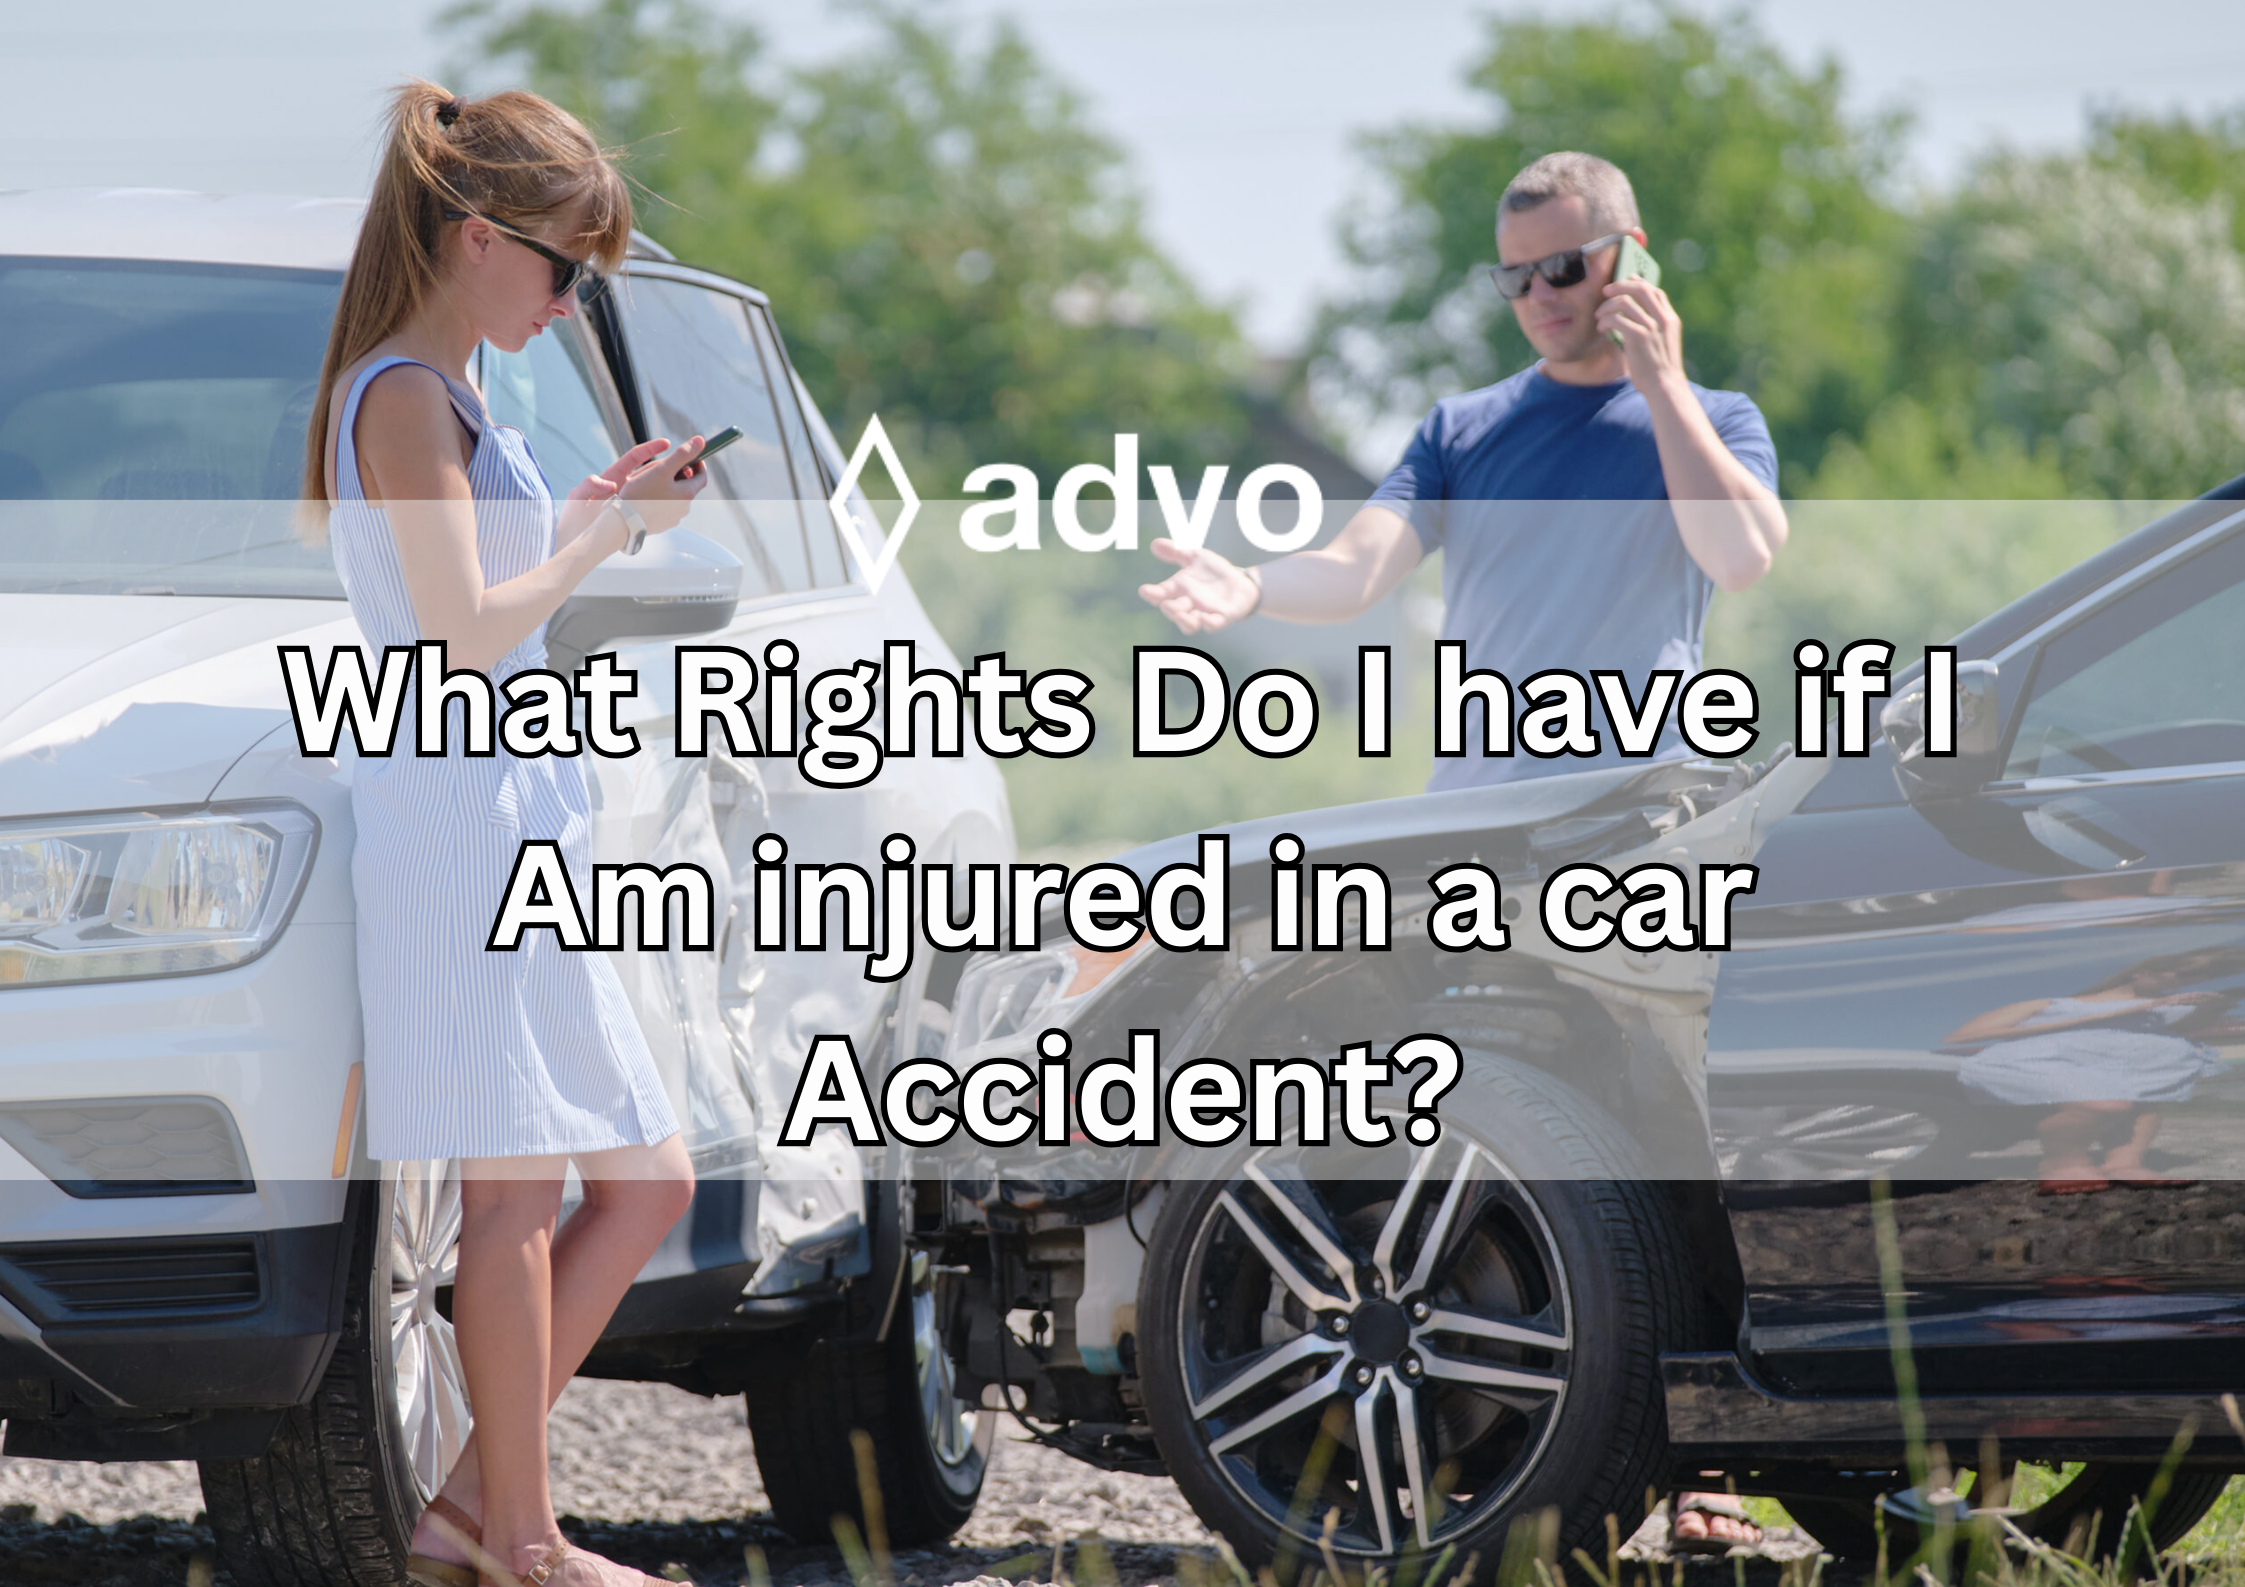 Expert Car Accident Injury Legal Advice visit ADVOLAW